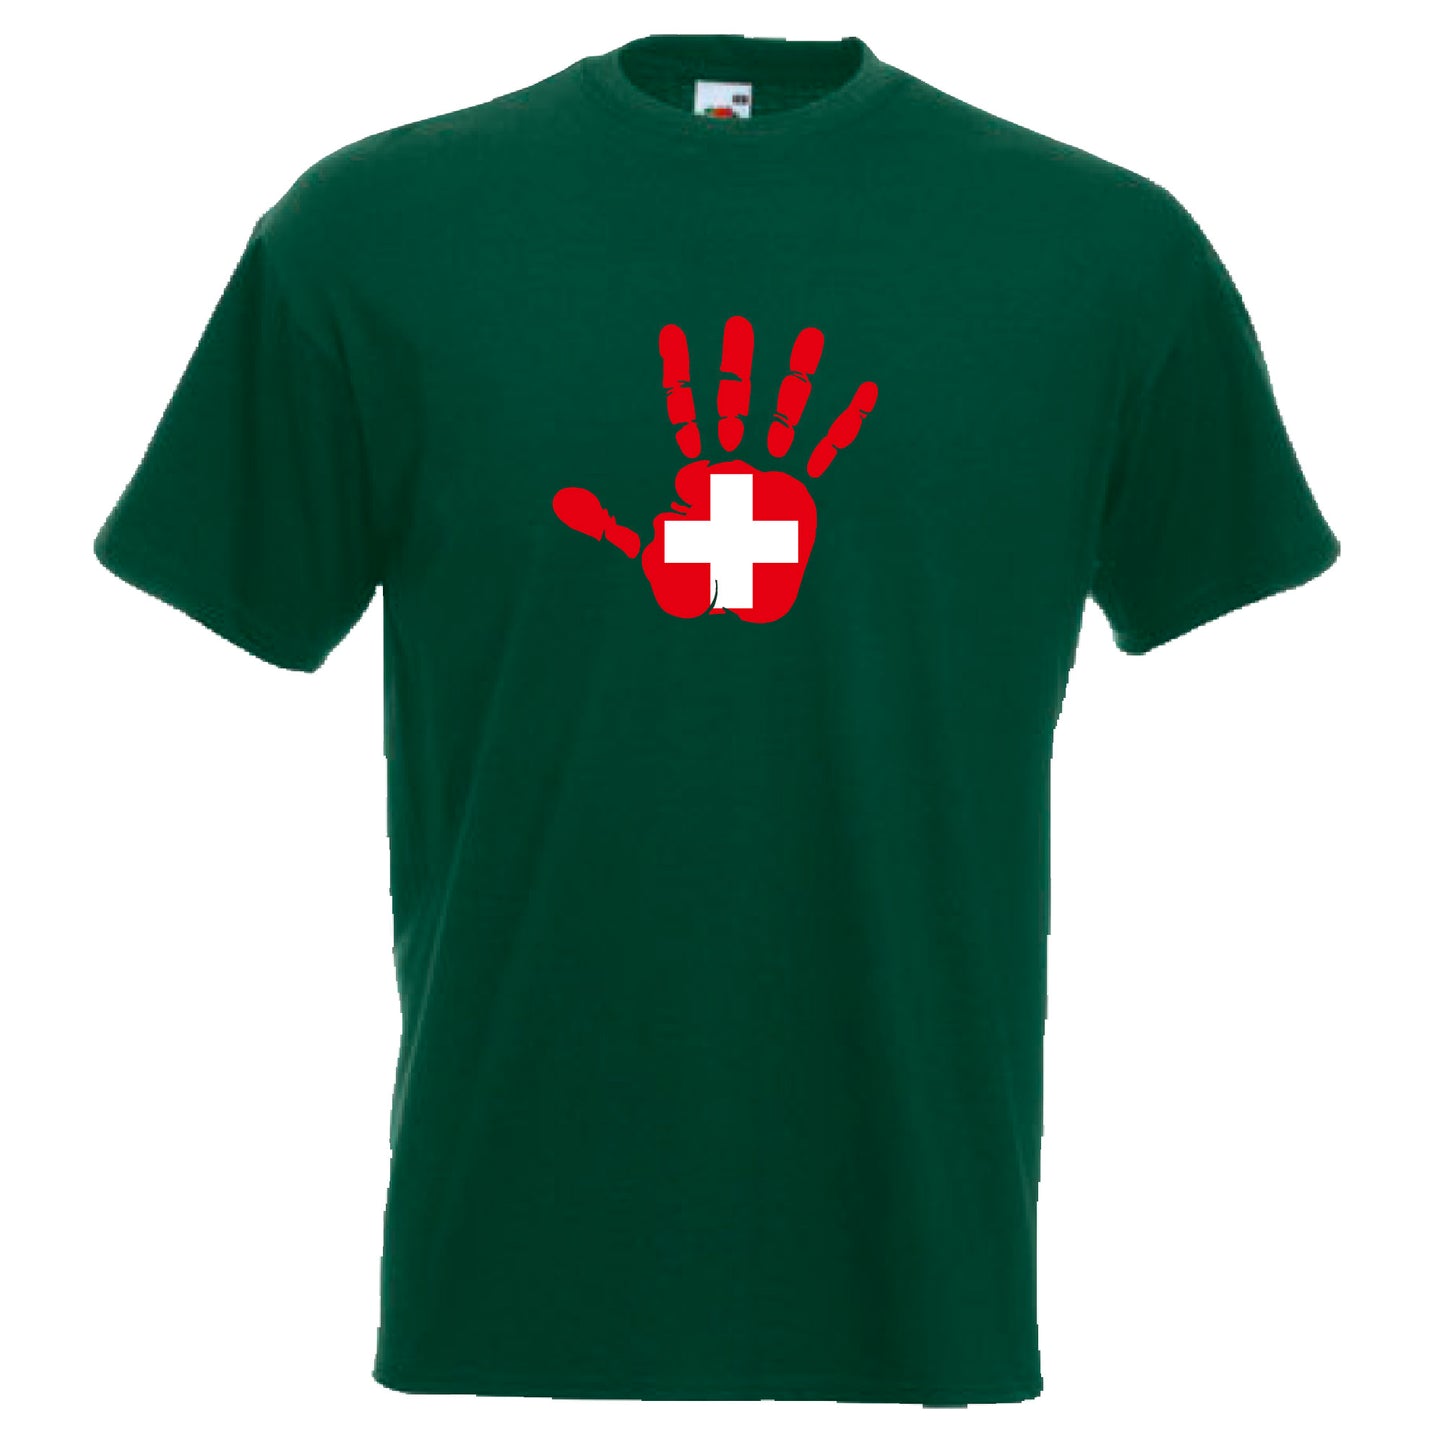 INDIGOS UG - T-Shirt Herren - Schweiz - Hand - Fussball